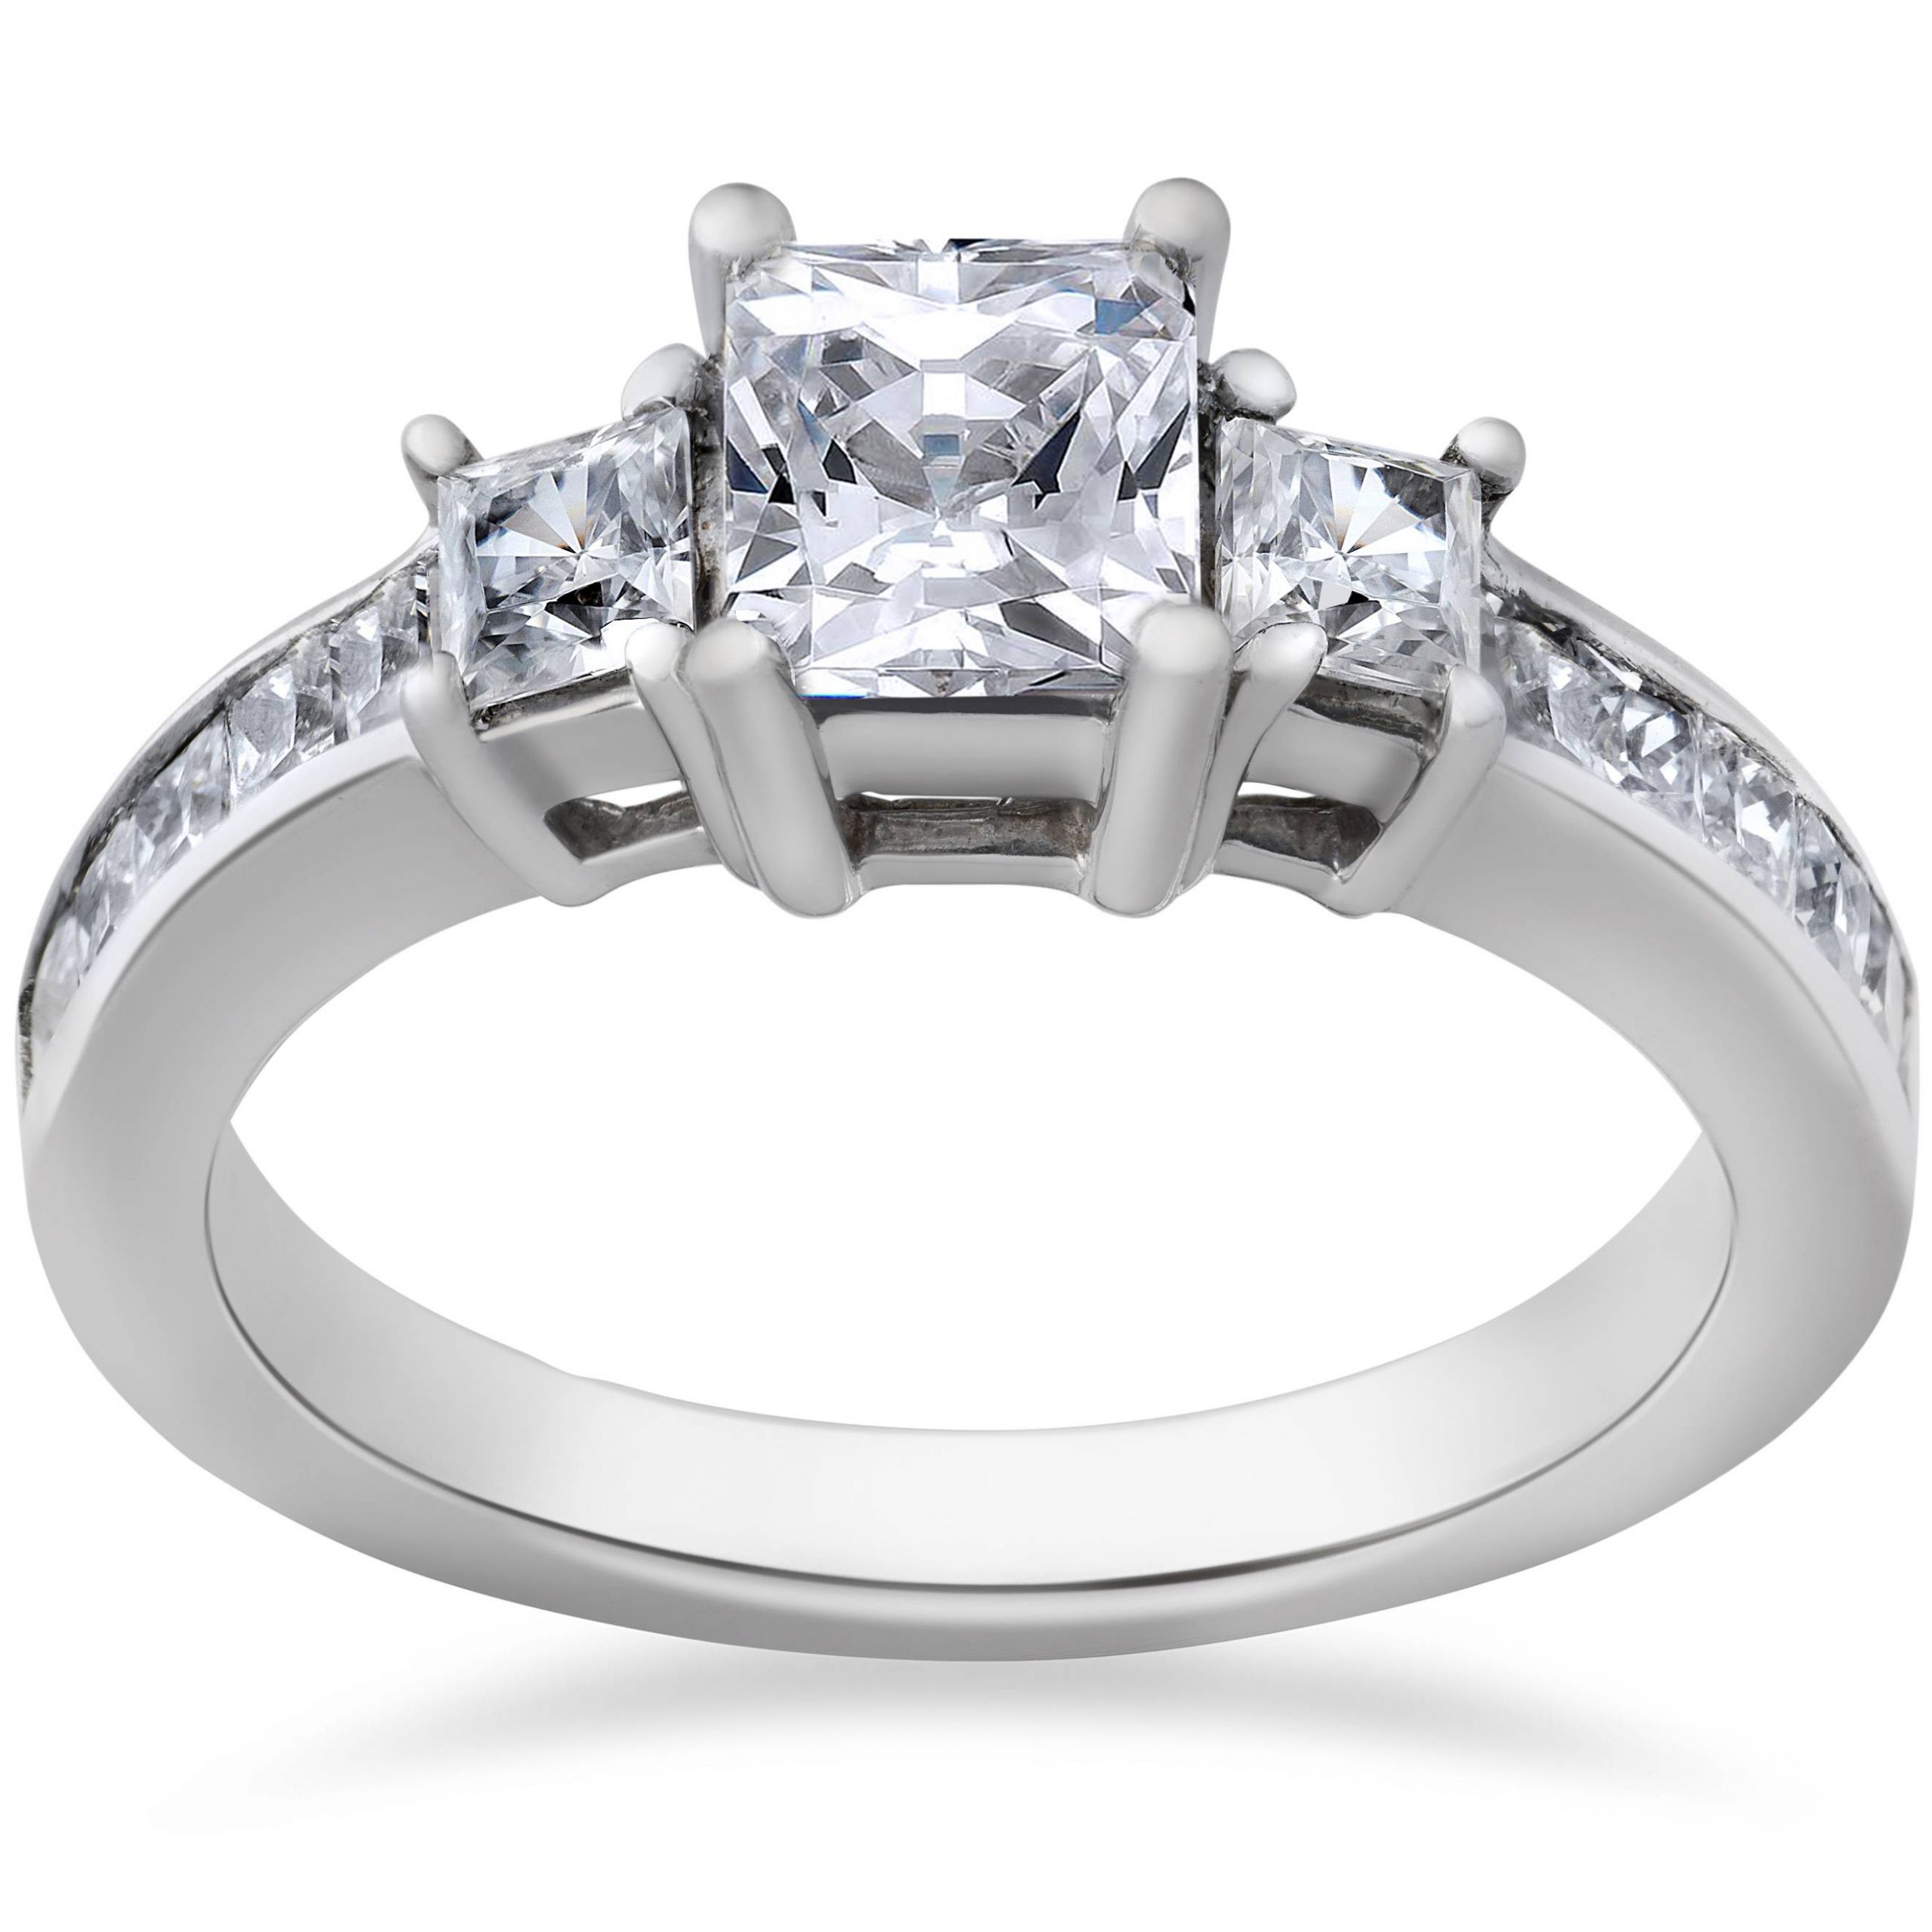 2ct Princess Cut Engagement Rings
 Princess Cut Diamond Engagement Ring 3 Stone 1 1 2ct 14k